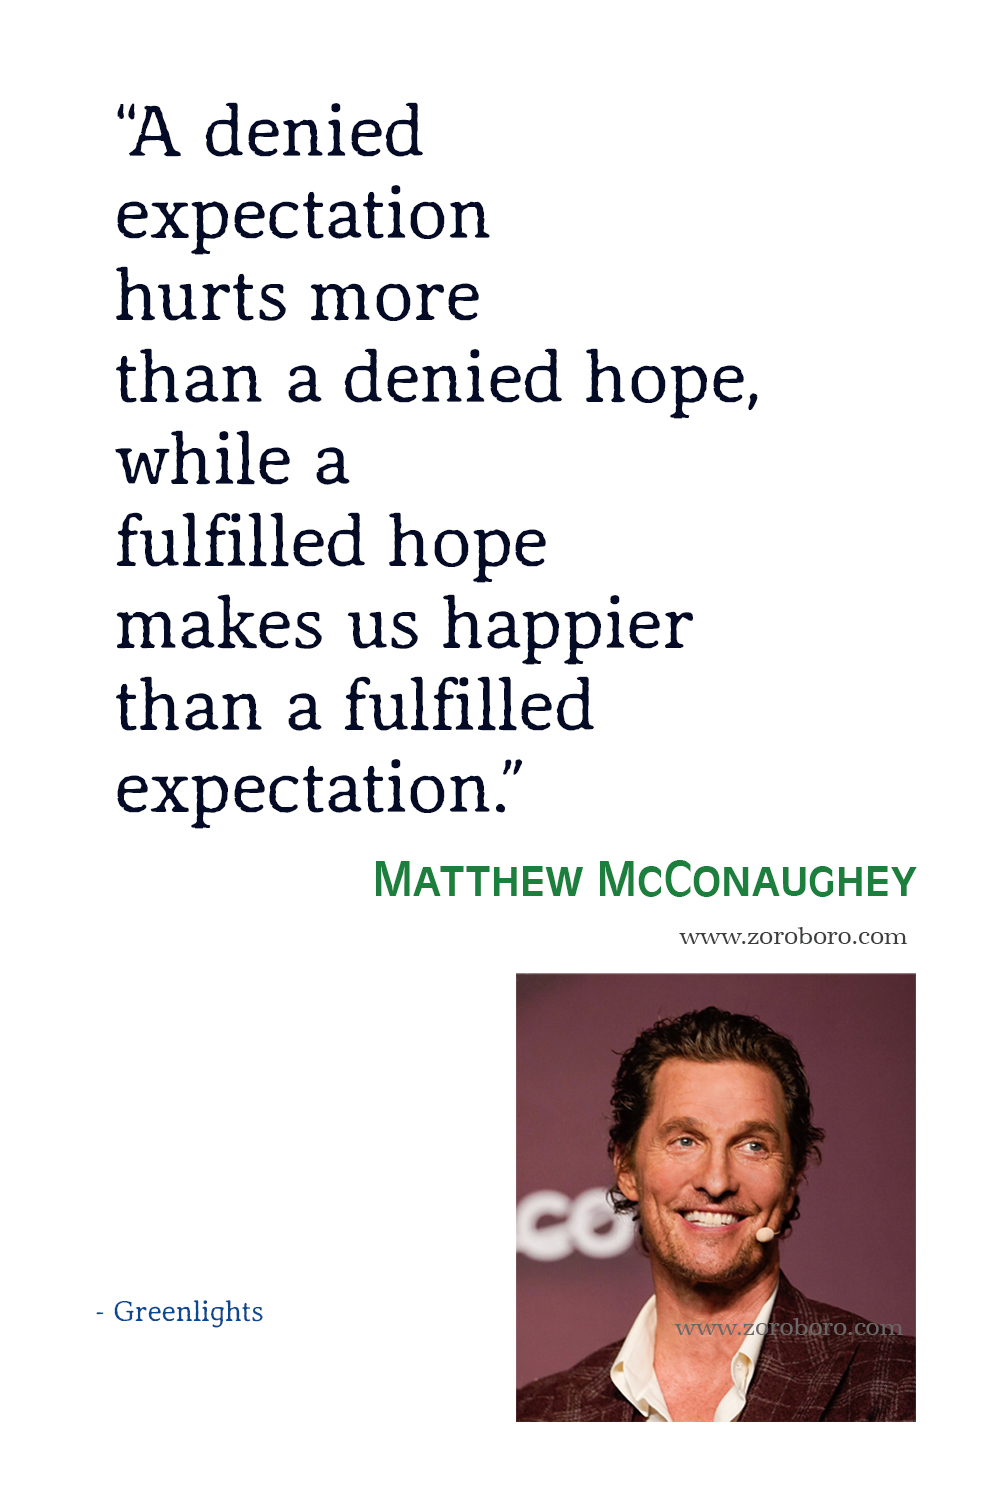 Matthew McConaughey Quotes, Matthew McConaughey Greenlights Quotes, Matthew McConaughey Inspirational Quotes, Matthew McConaughey Book Quotes.